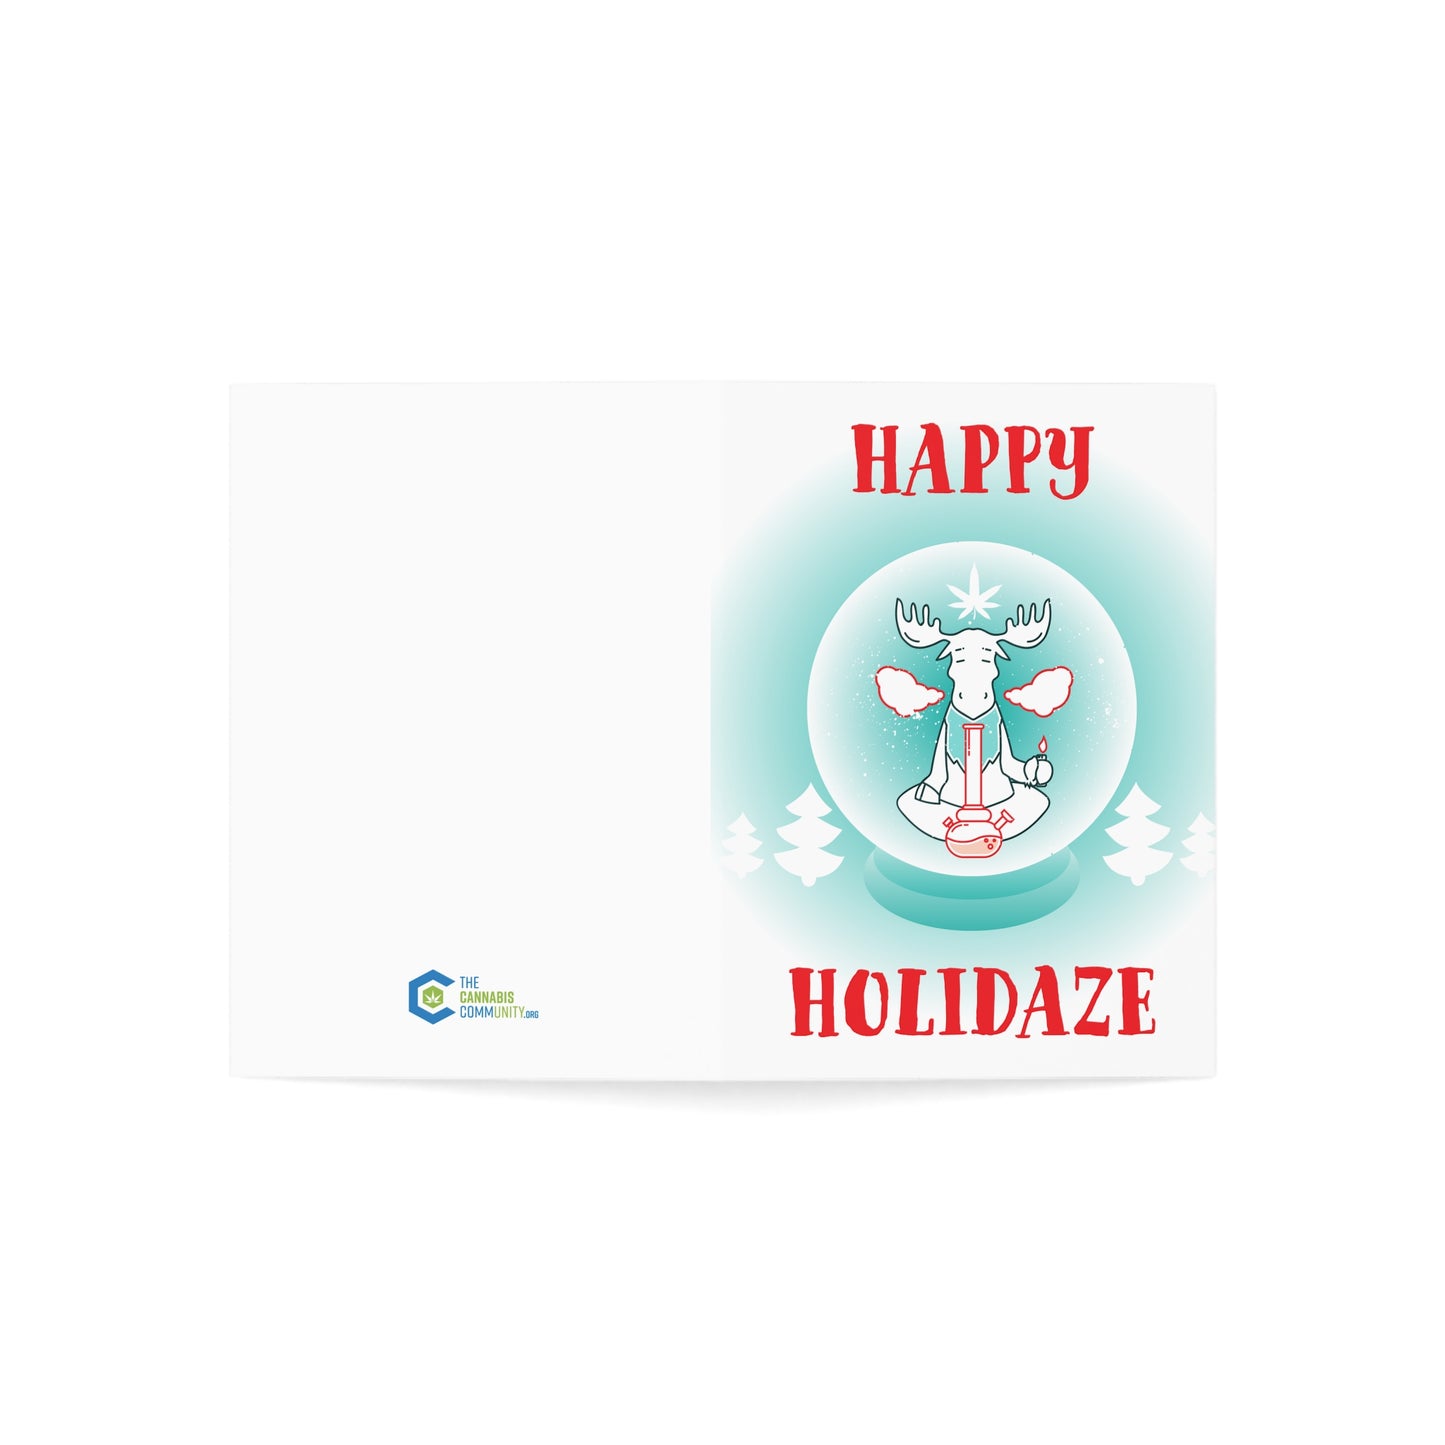 Happy Holidaze Zen Moose Smoking Bong Merry Christmas Greeting Cards (1, 10, 30, and 50pcs)